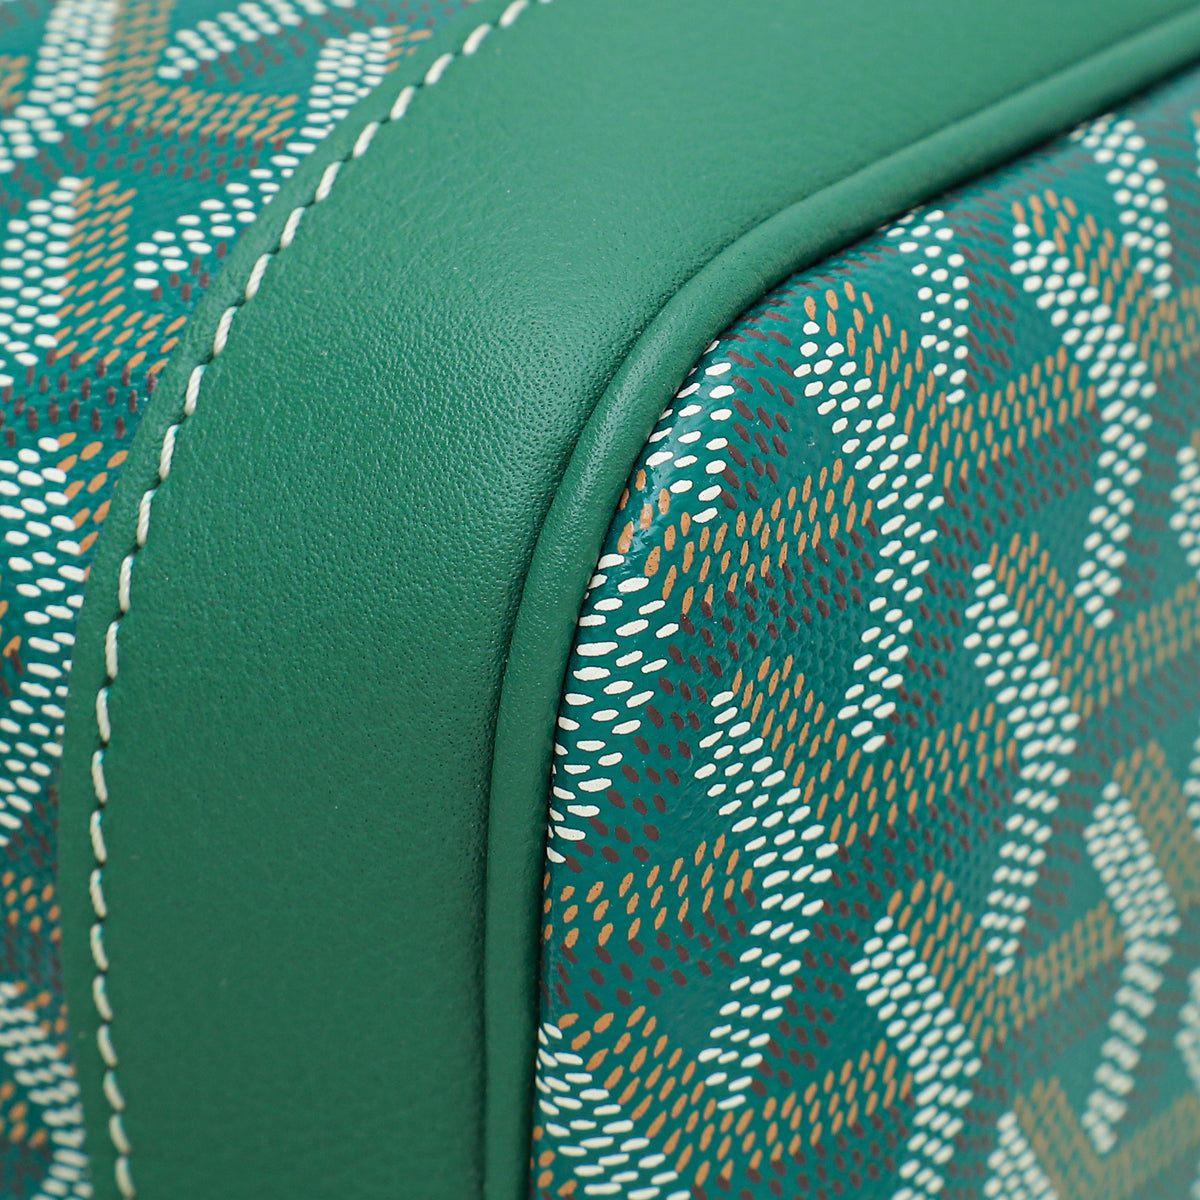 NEW Goyard Petit Flot Bucket Bag in Green Size: 23 cm x 14.5 cm x